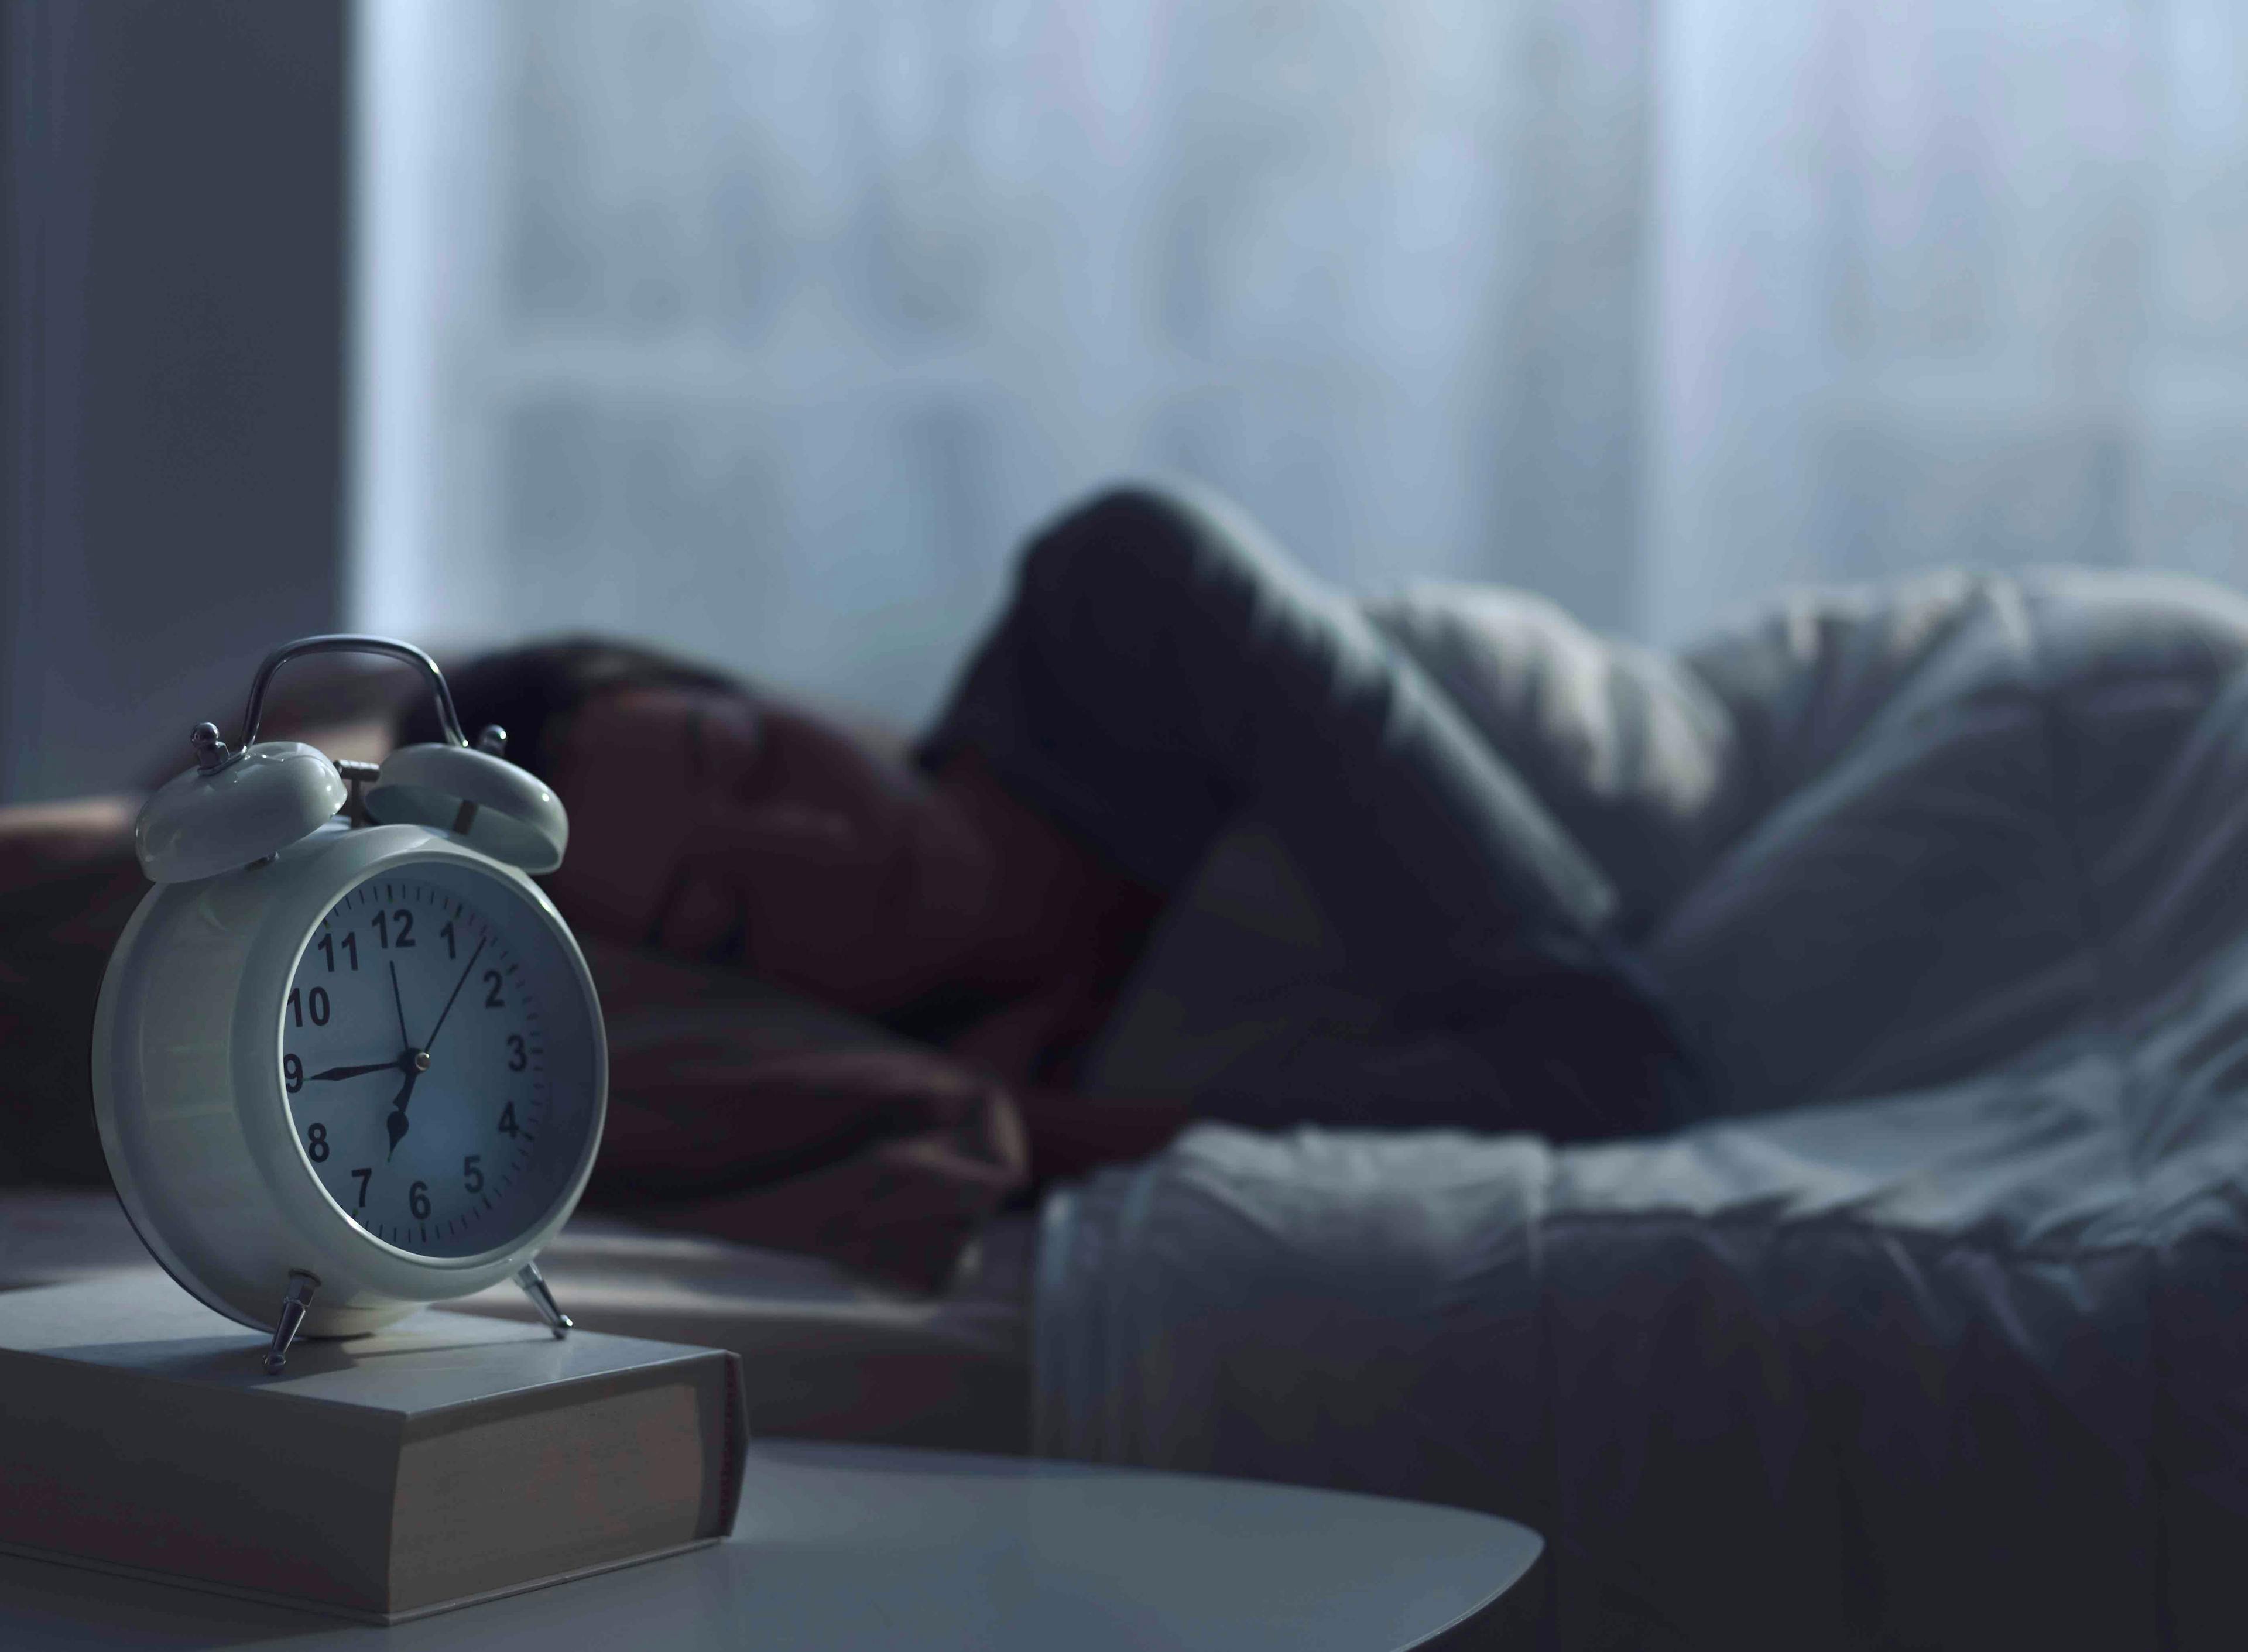 Woman sleeping next to alarm clock | Image credit: stokkete - stock.adobe.com